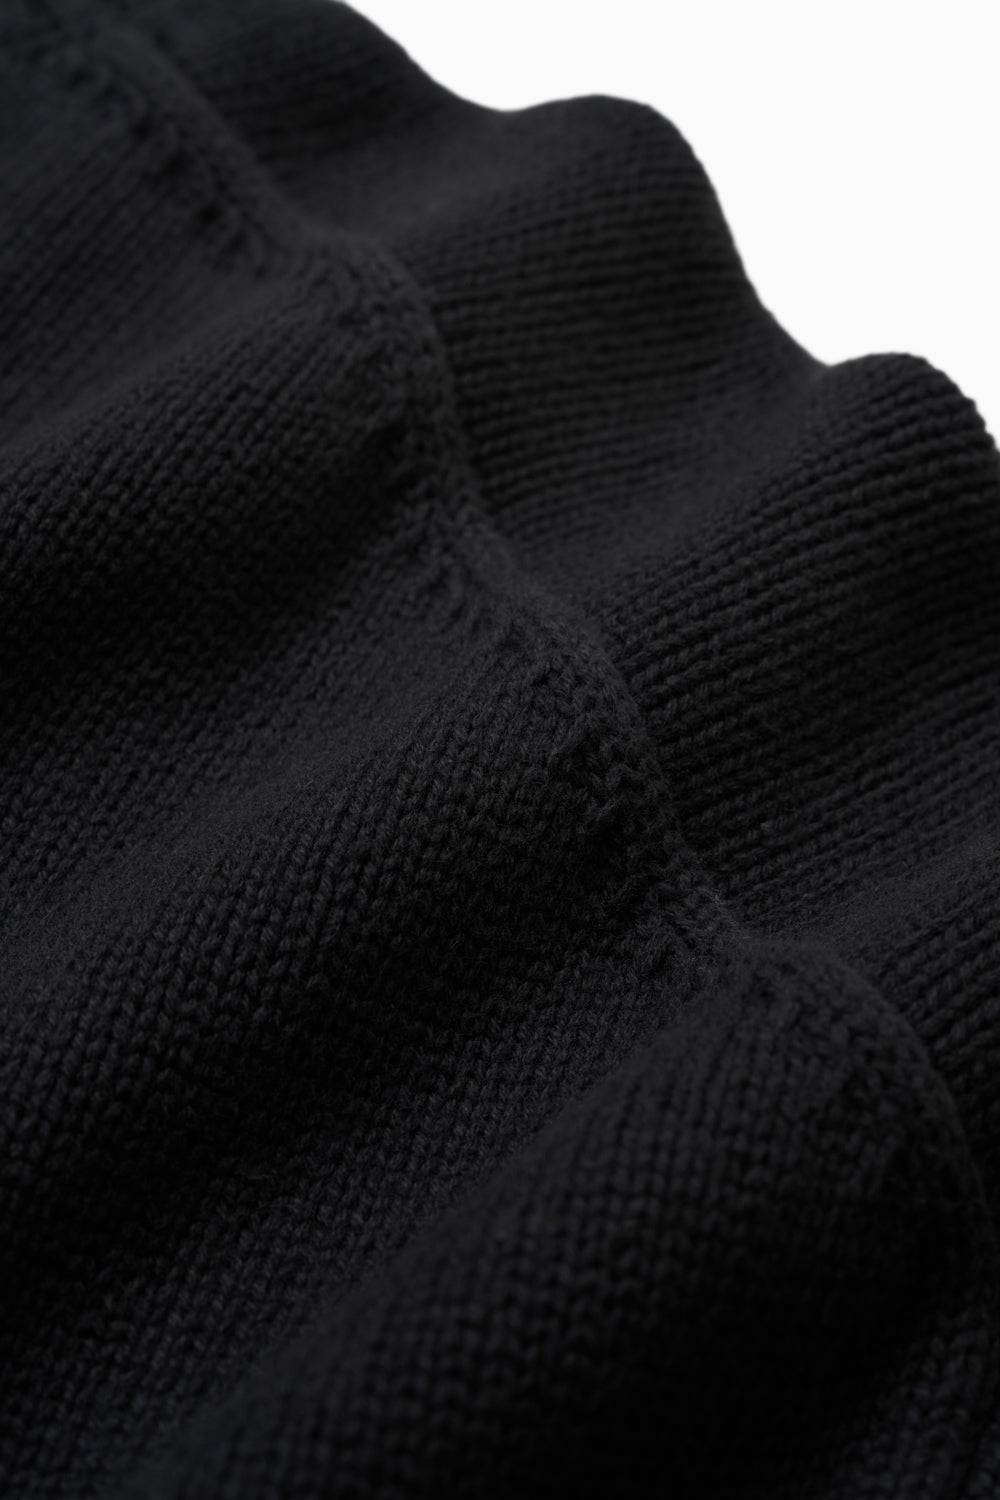 Net Intarsia Knit - Black